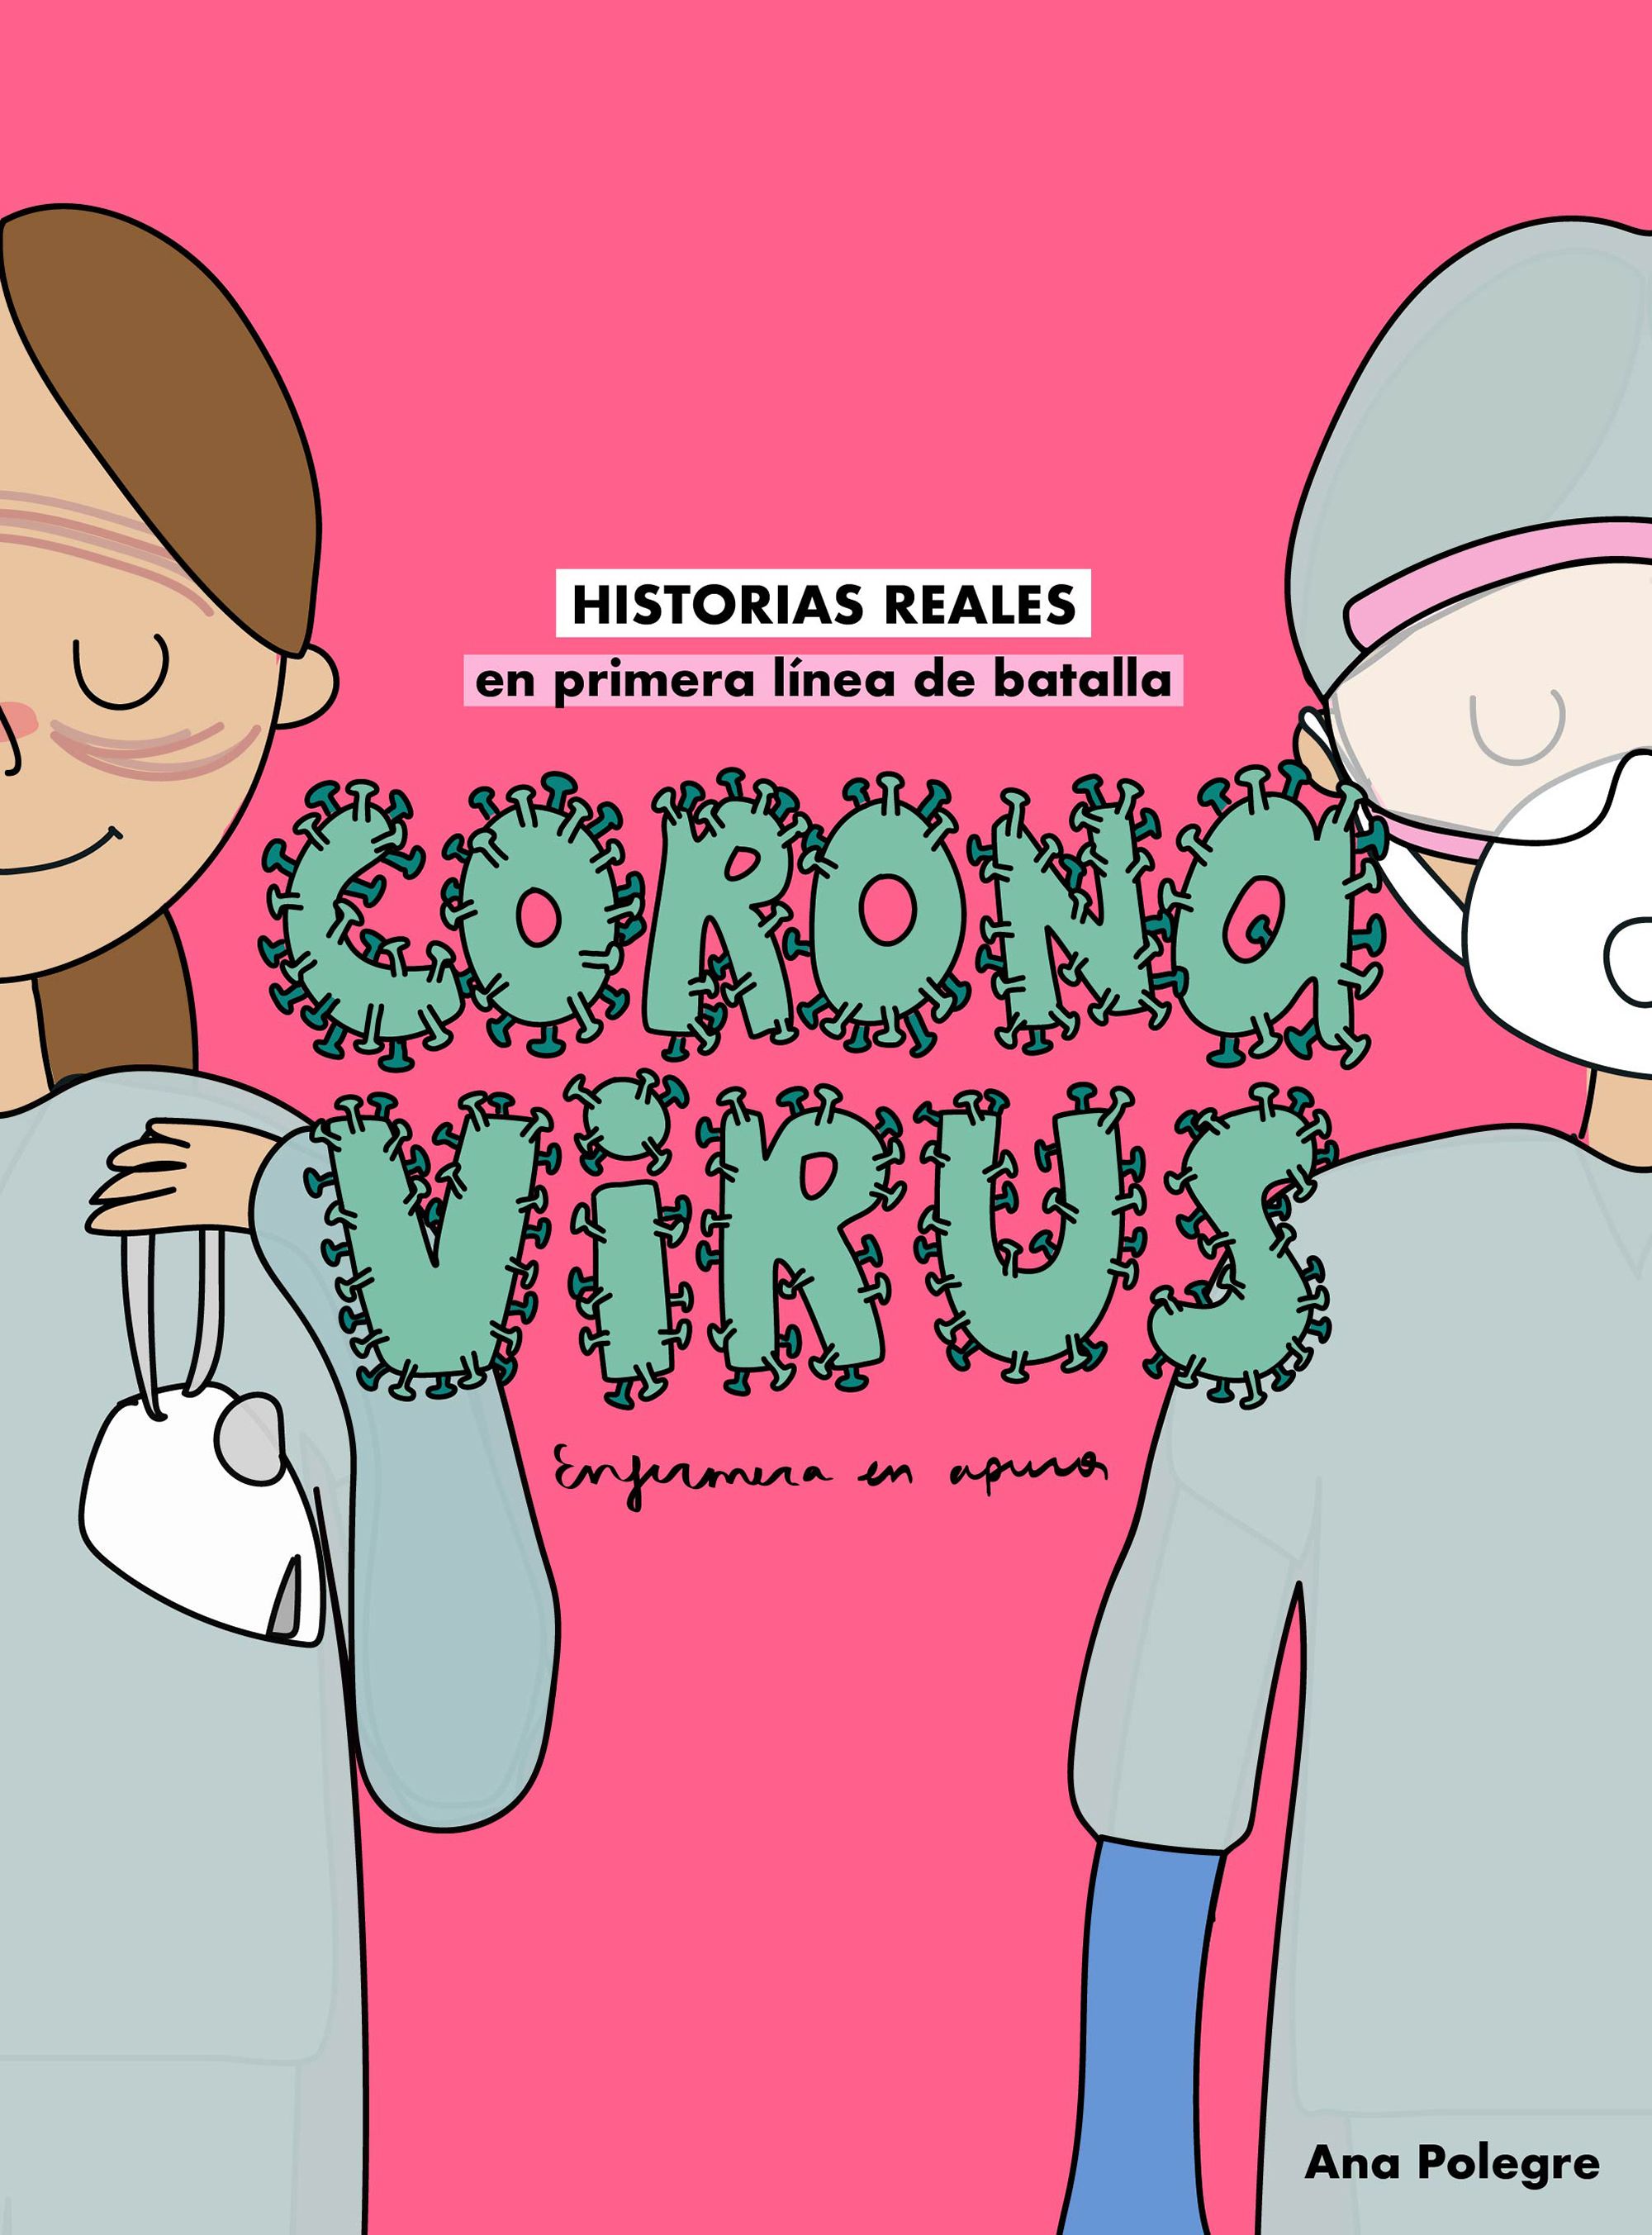 Coronavirus, en primera linea de batalla "Historias reales"